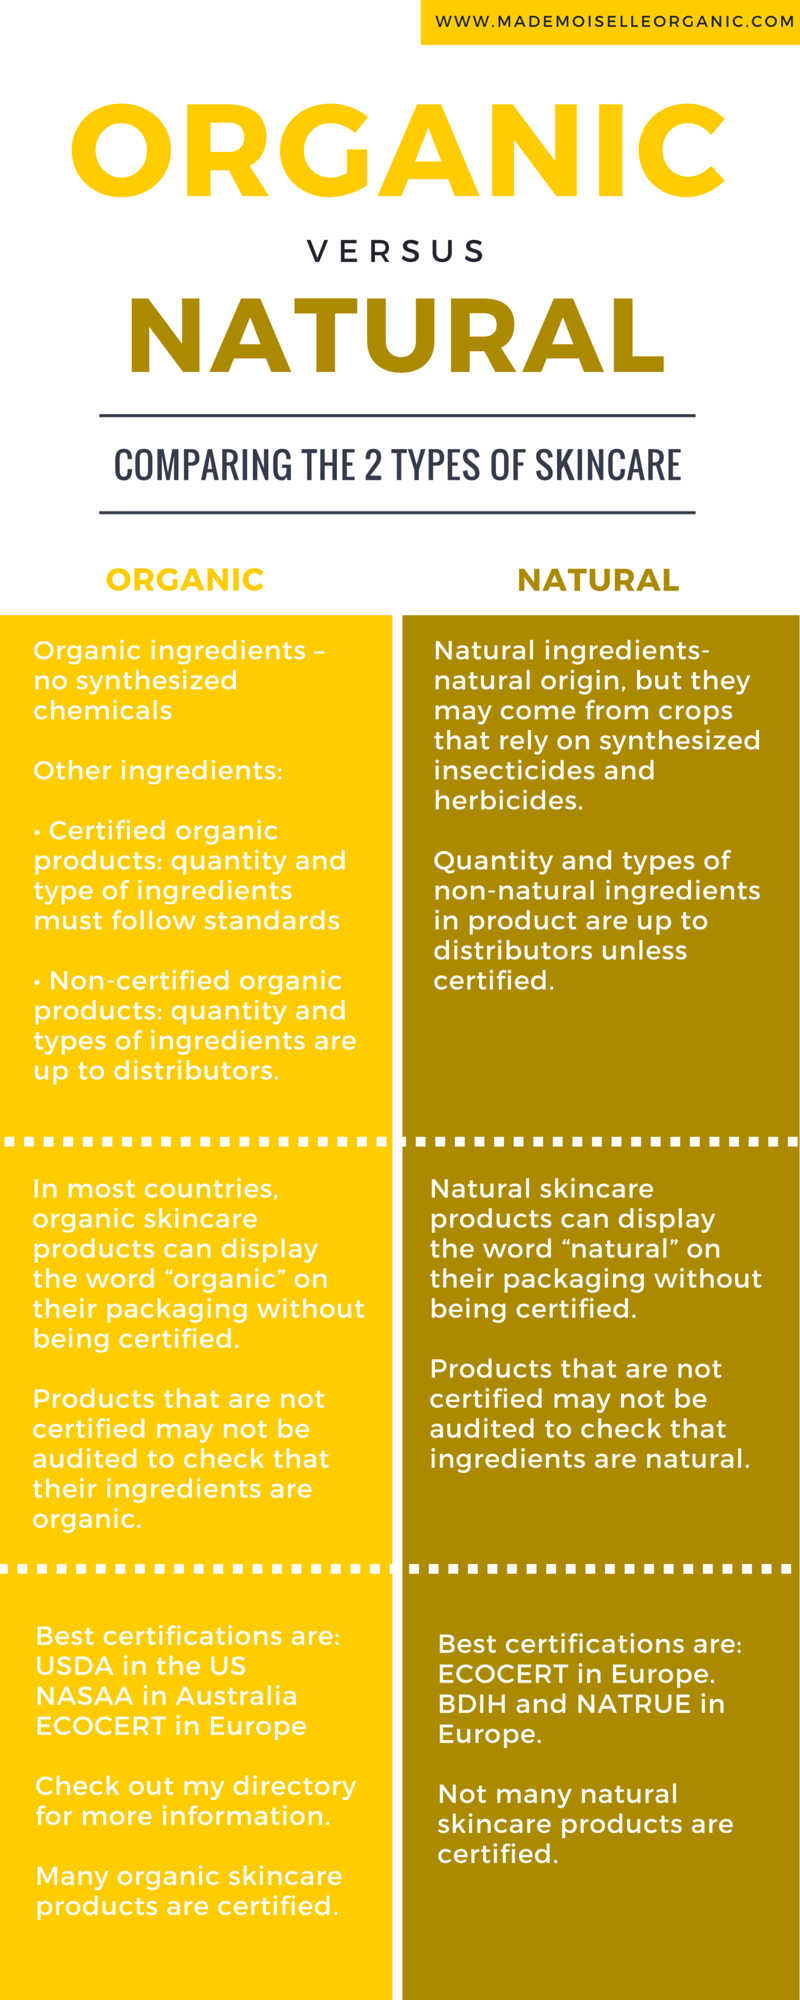 Organic skincare versus Natural skincare summary